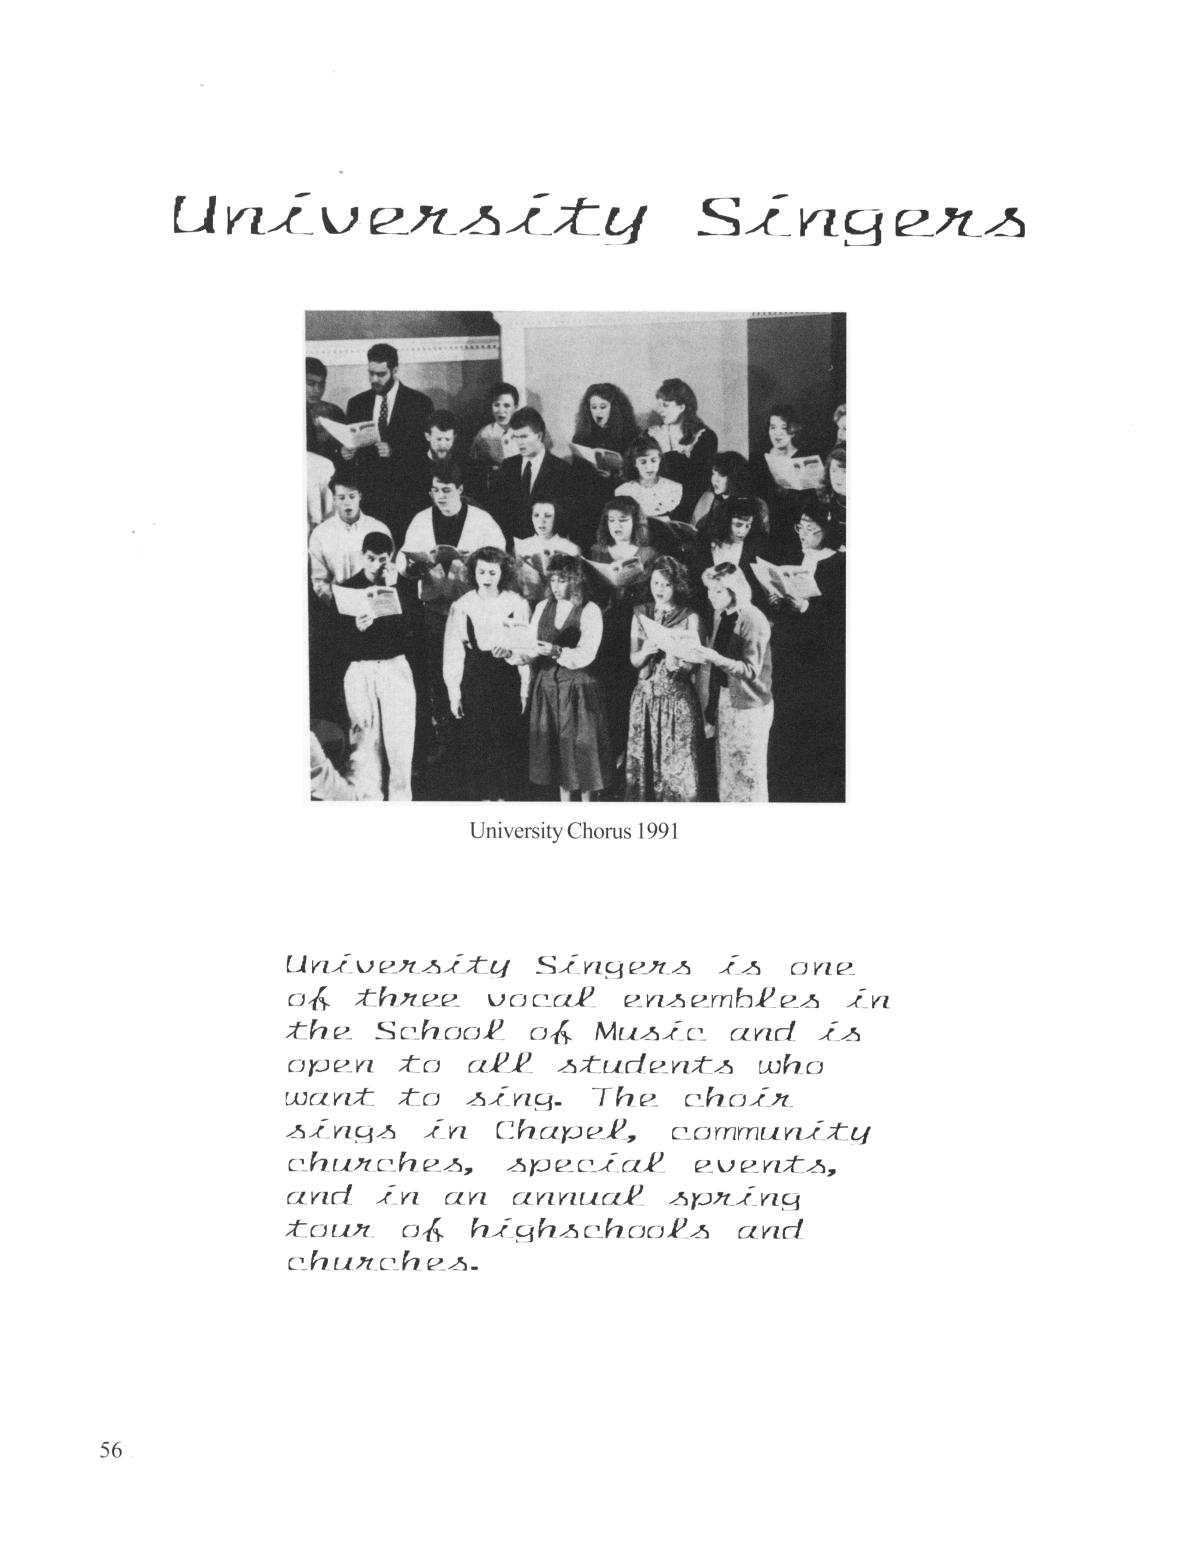 The Swarm, Yearbook of Howard Payne University, 2002
                                                
                                                    56
                                                